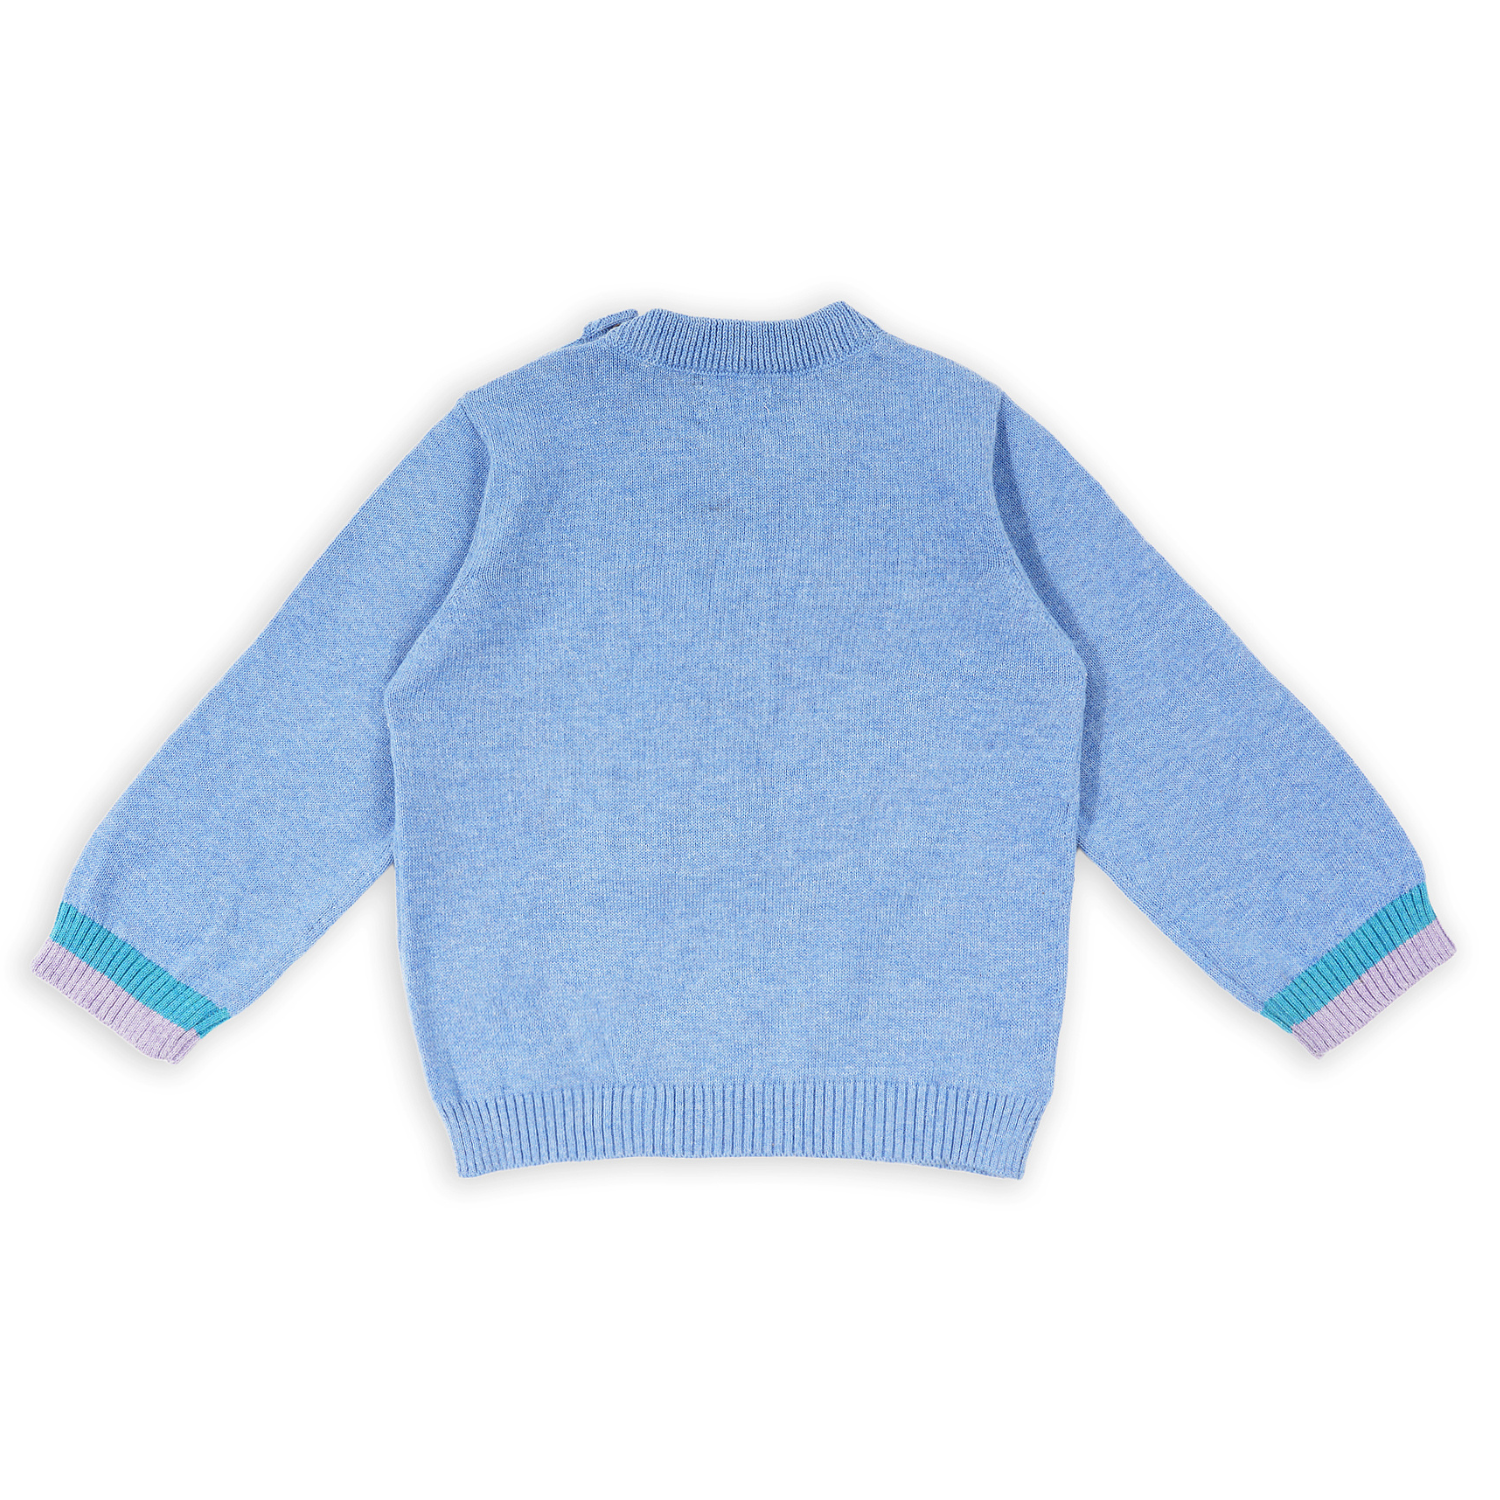 Blue and Organic White Ballon Teddy Hug Sweater Combo Set of 2